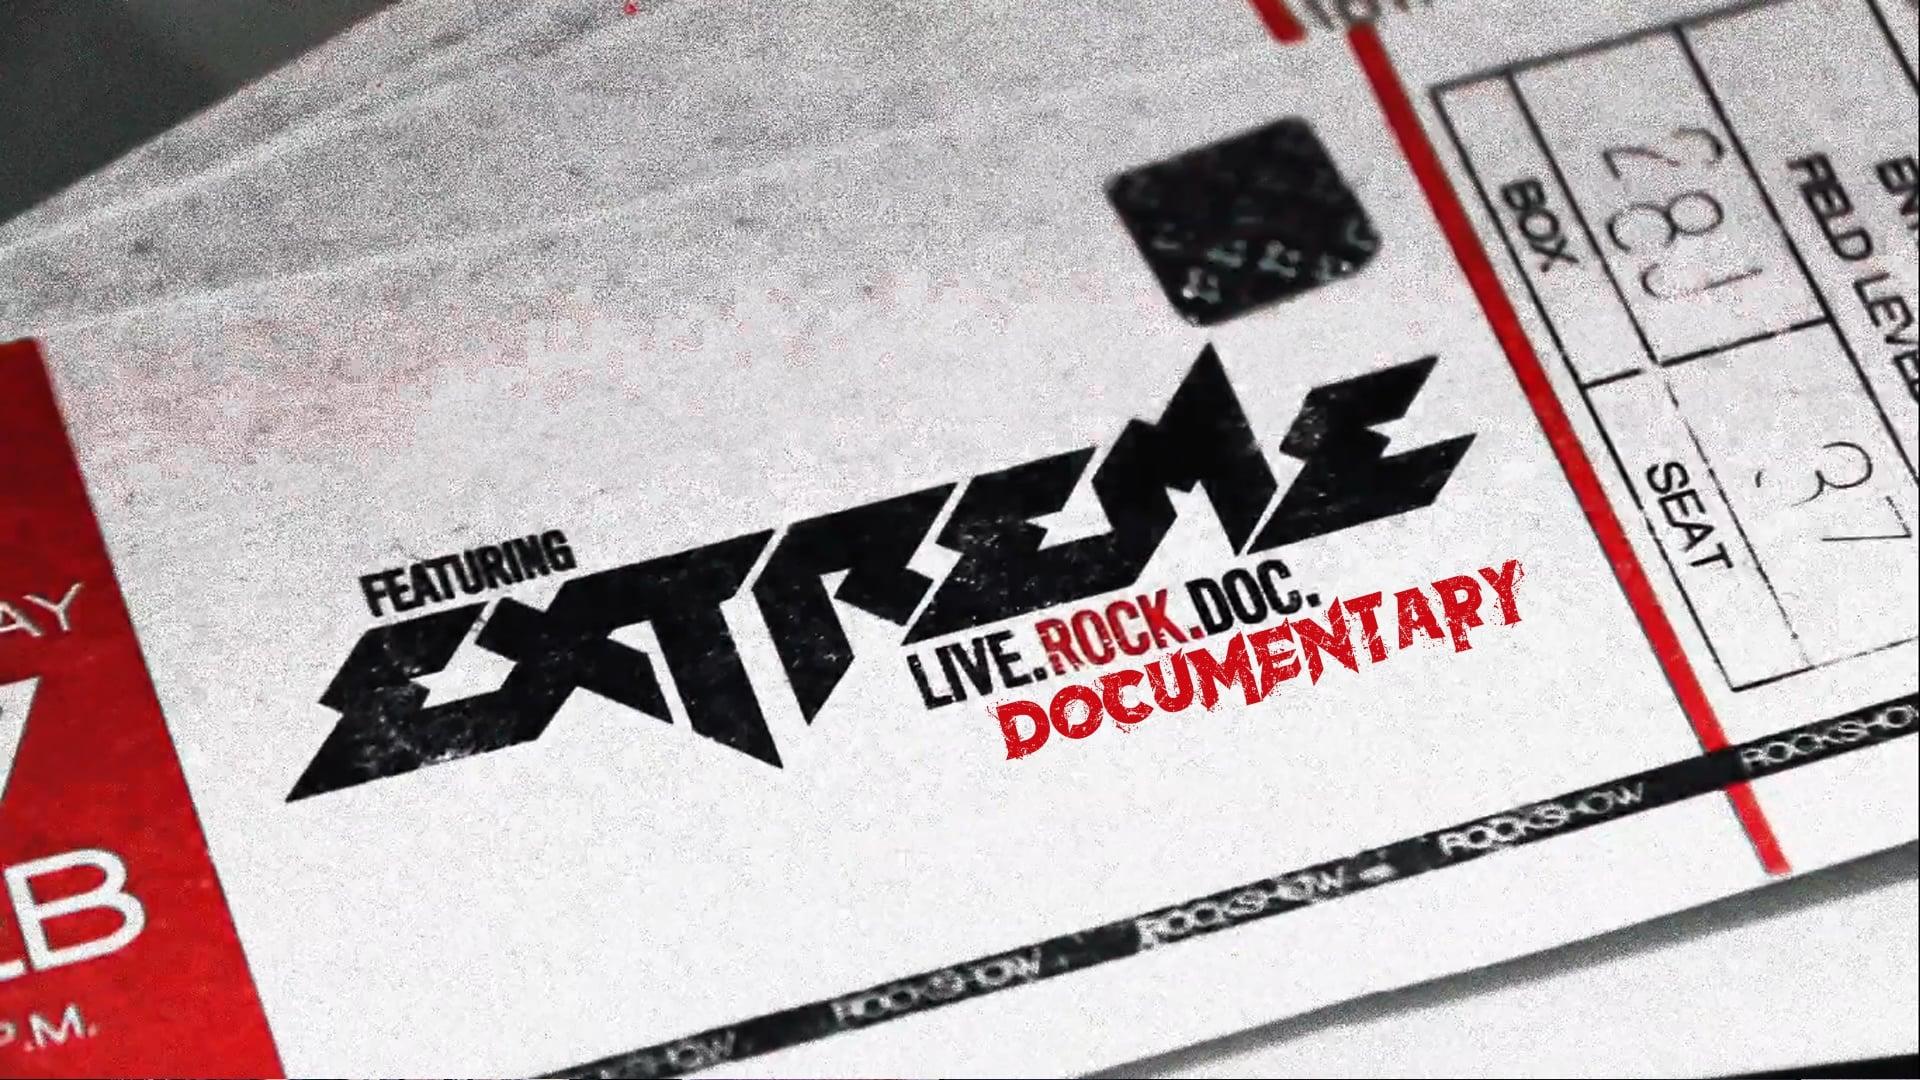 Extreme: Pornograffitti Live 25 Documentary backdrop